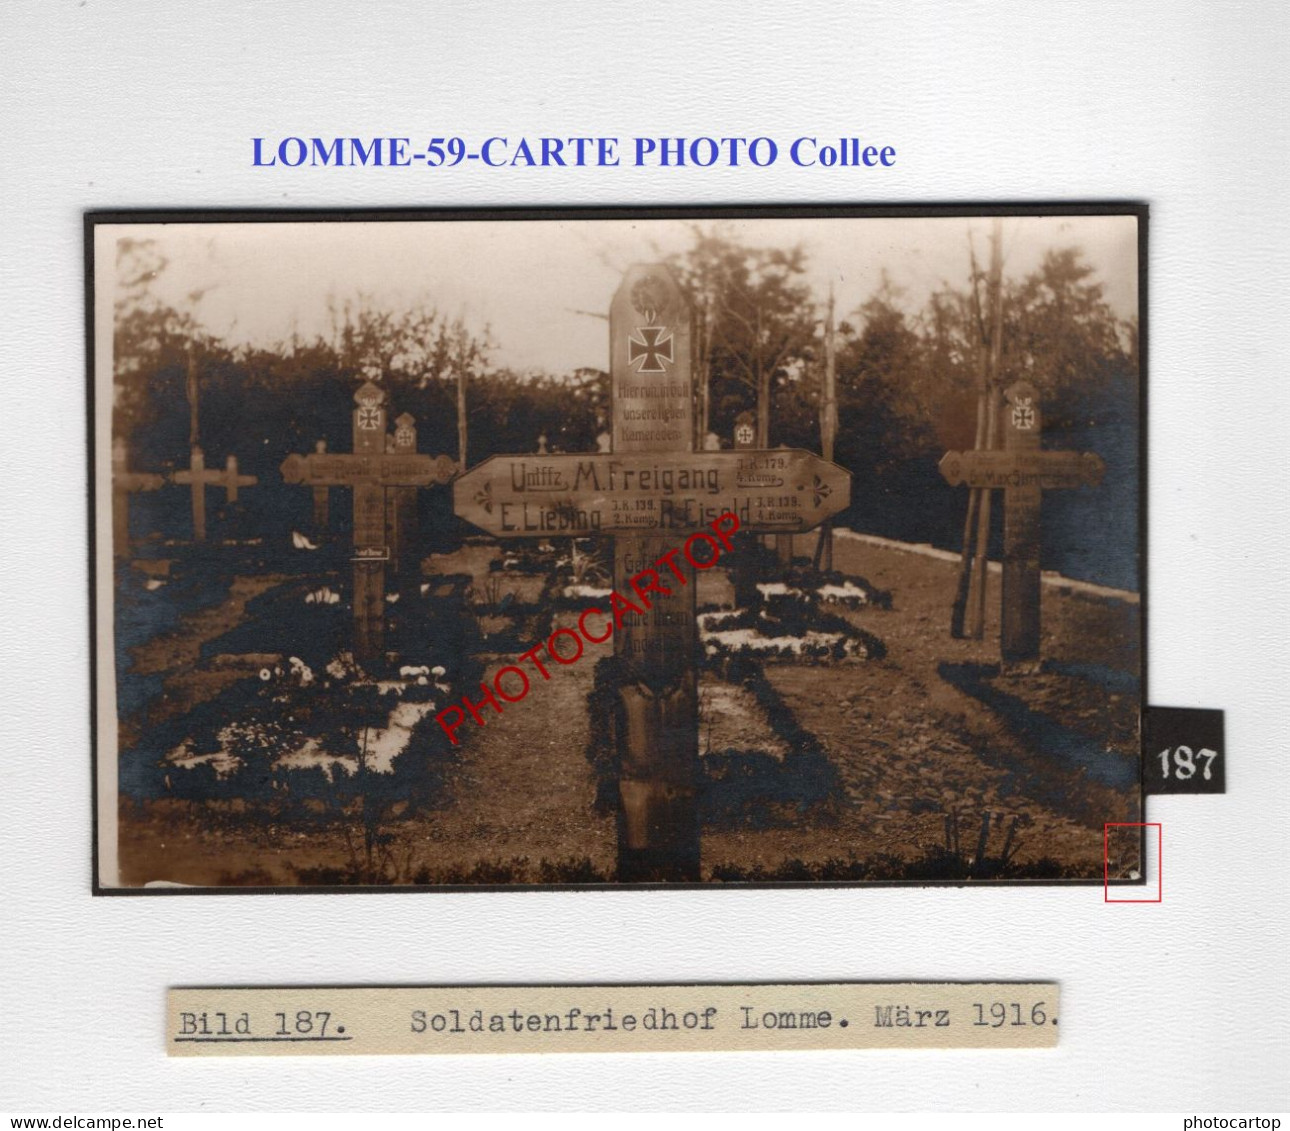 LOMME-59-Tombes-Cimetiere-CARTE PHOTO Allemande Collee-GUERRE 14-18-1 WK-MILITARIA- - Soldatenfriedhöfen